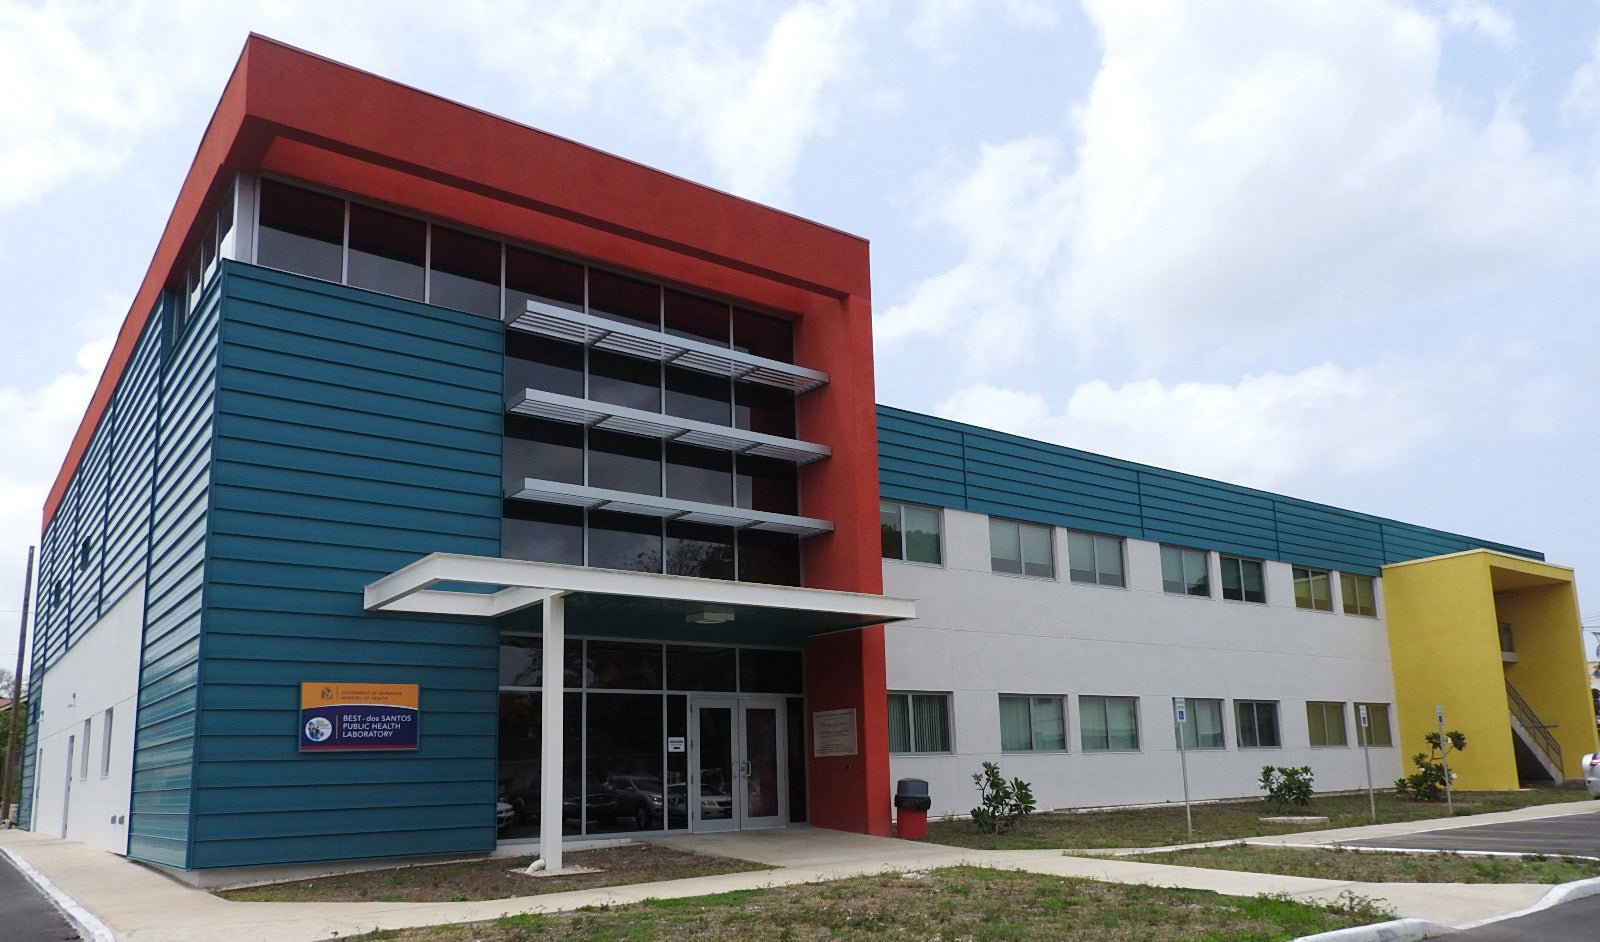 Best-dos Santos Public Health Laboratory